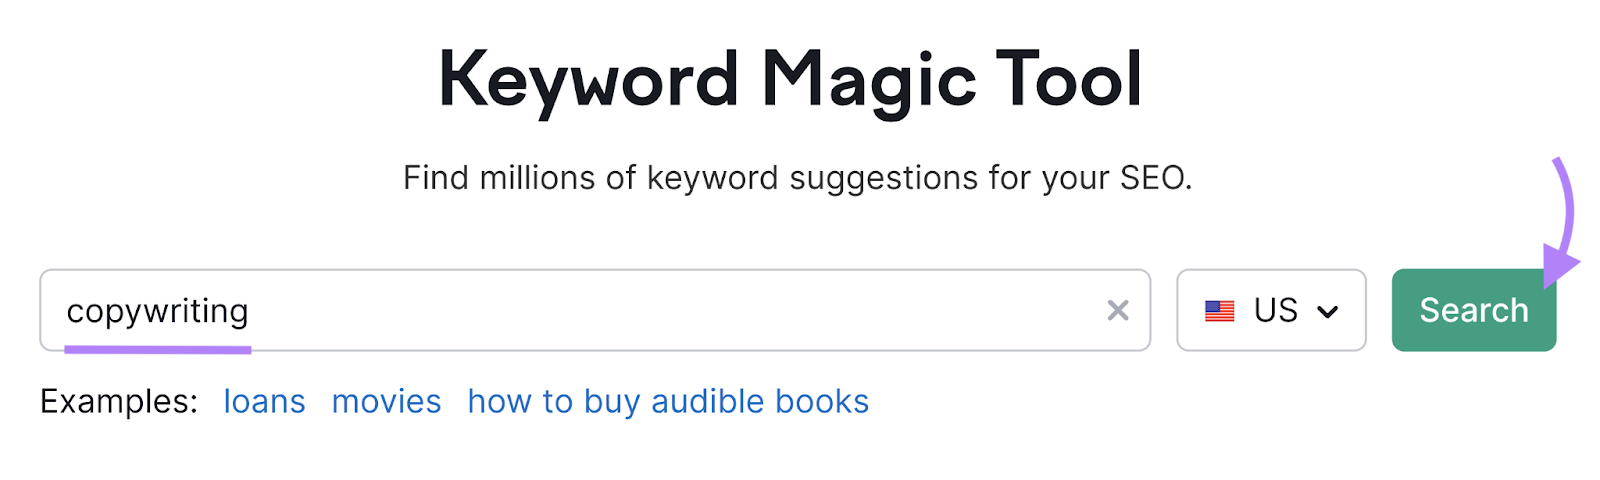 "copywriting" entered into the Keyword Magic Tool search bar